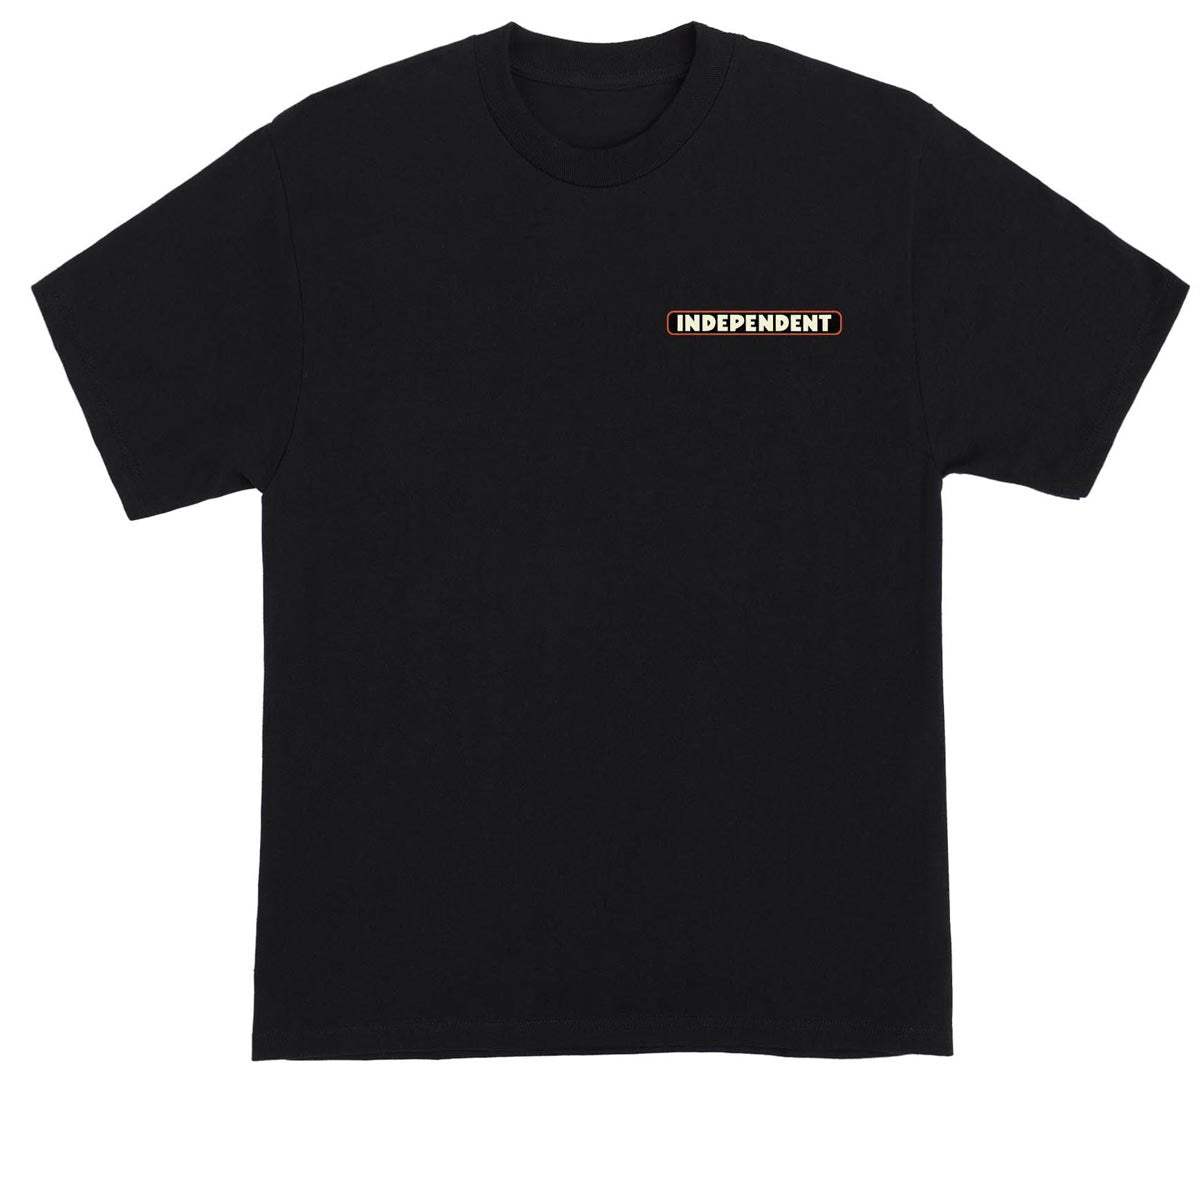 Independent ITC Profile T-Shirt - Black image 2